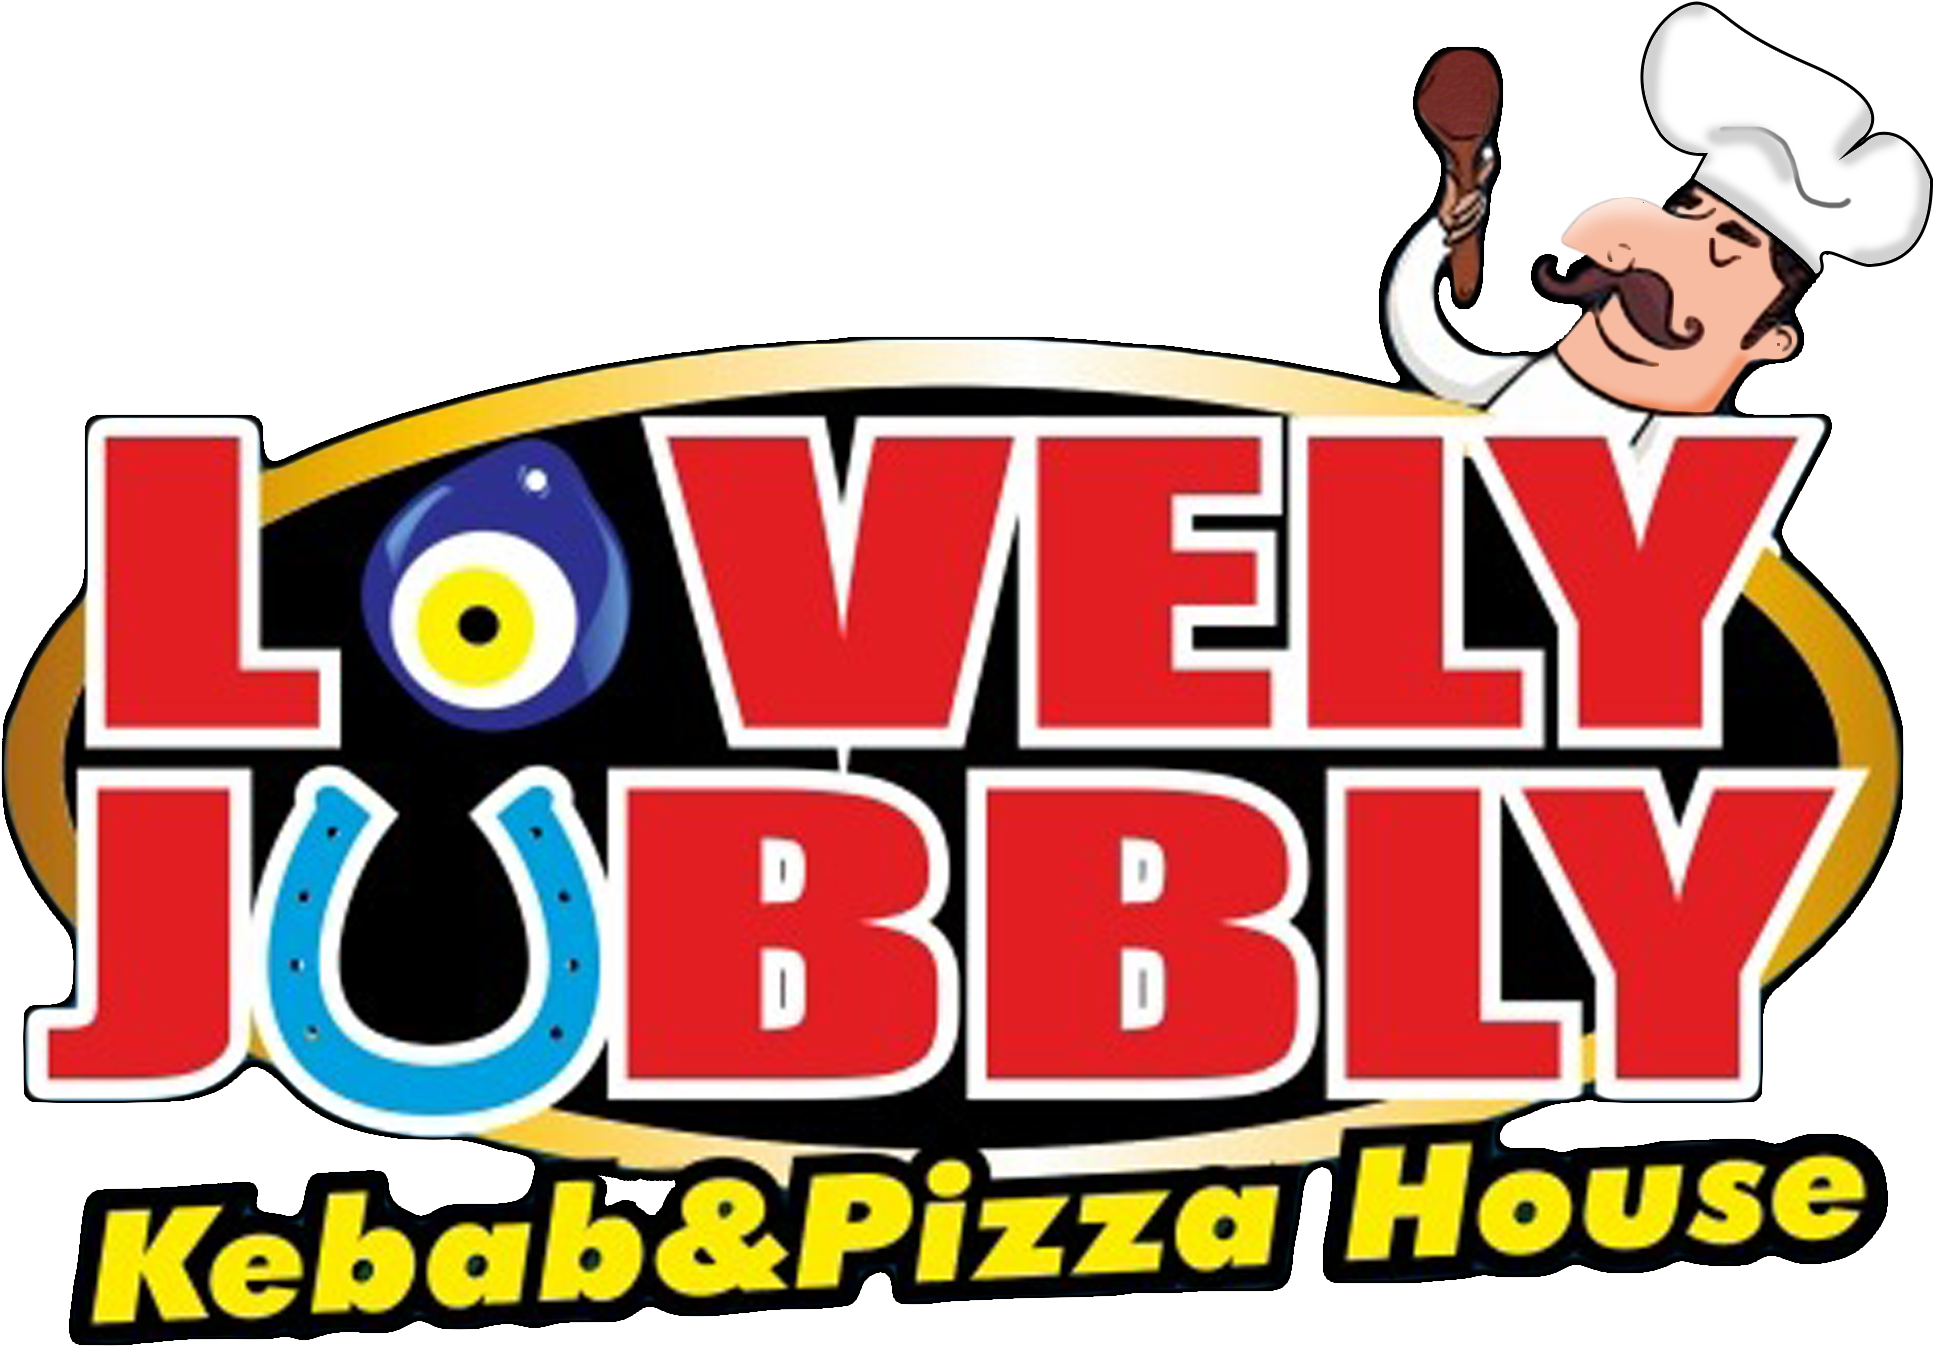 Lovely Jubbly Kebab House - Lovely Jubbly Kebab House (1952x1365)